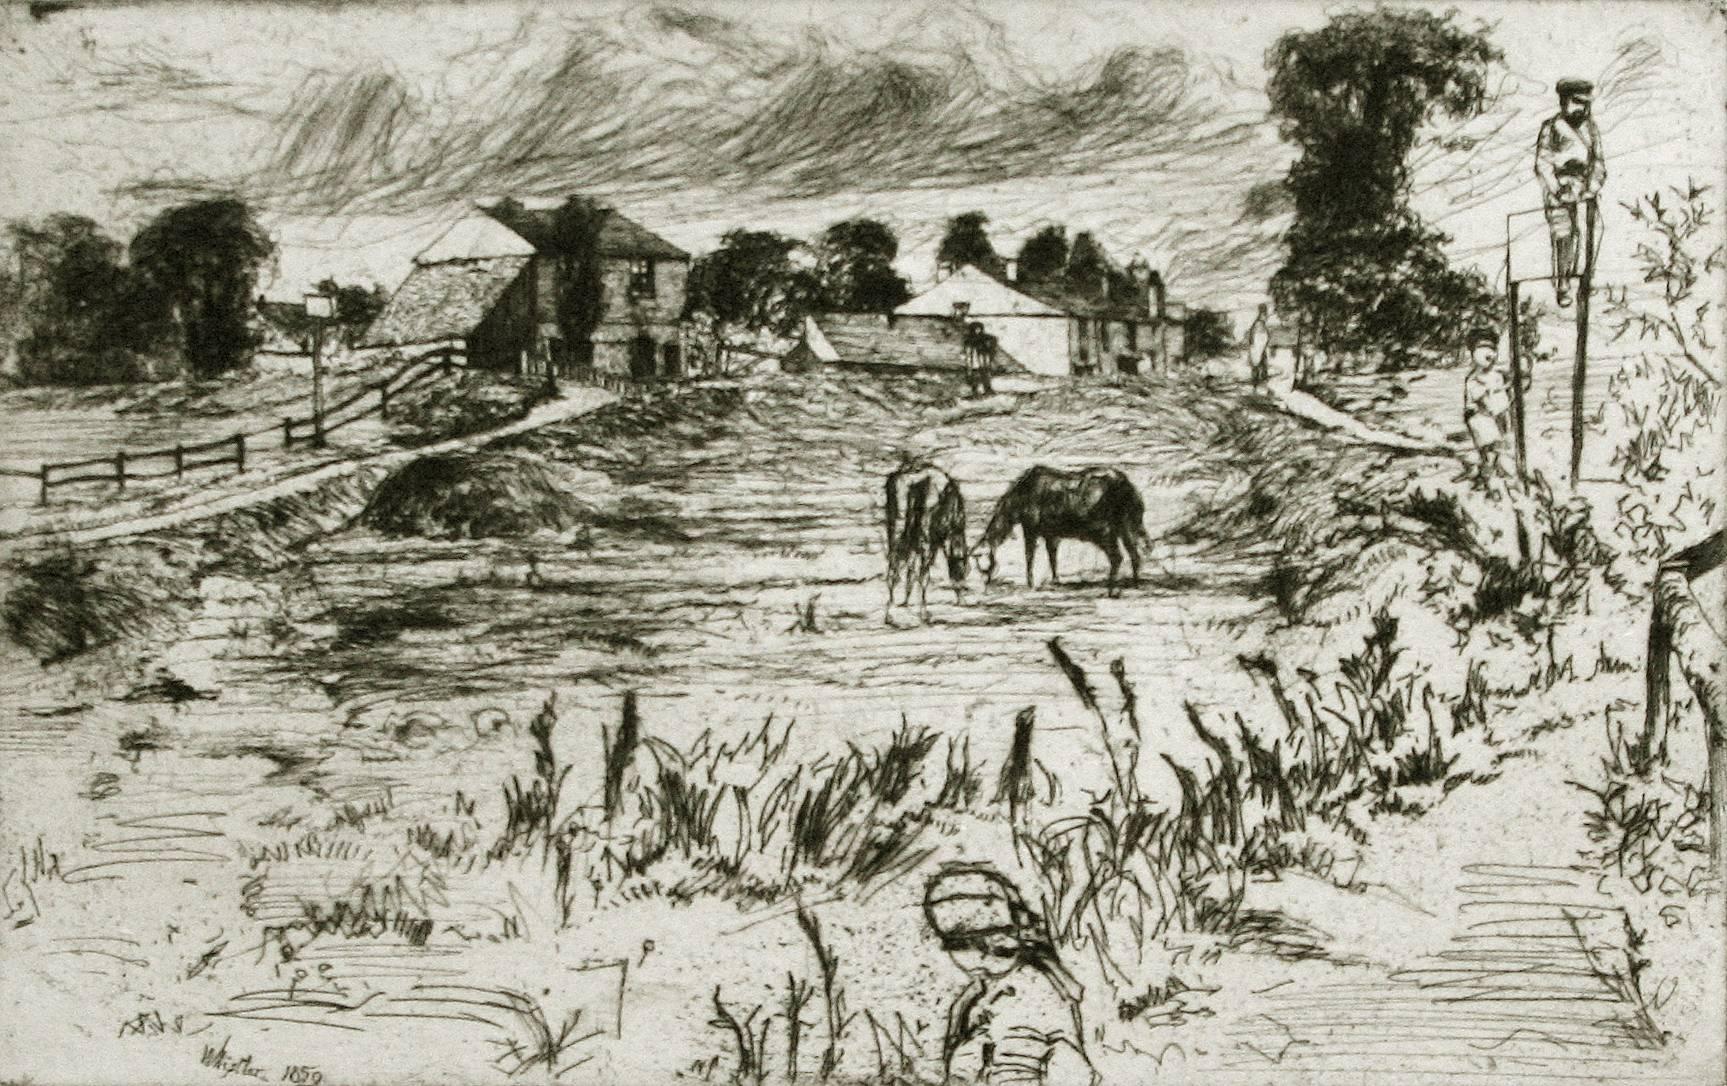 James Abbott McNeill Whistler Animal Print - Landscape with Horses.